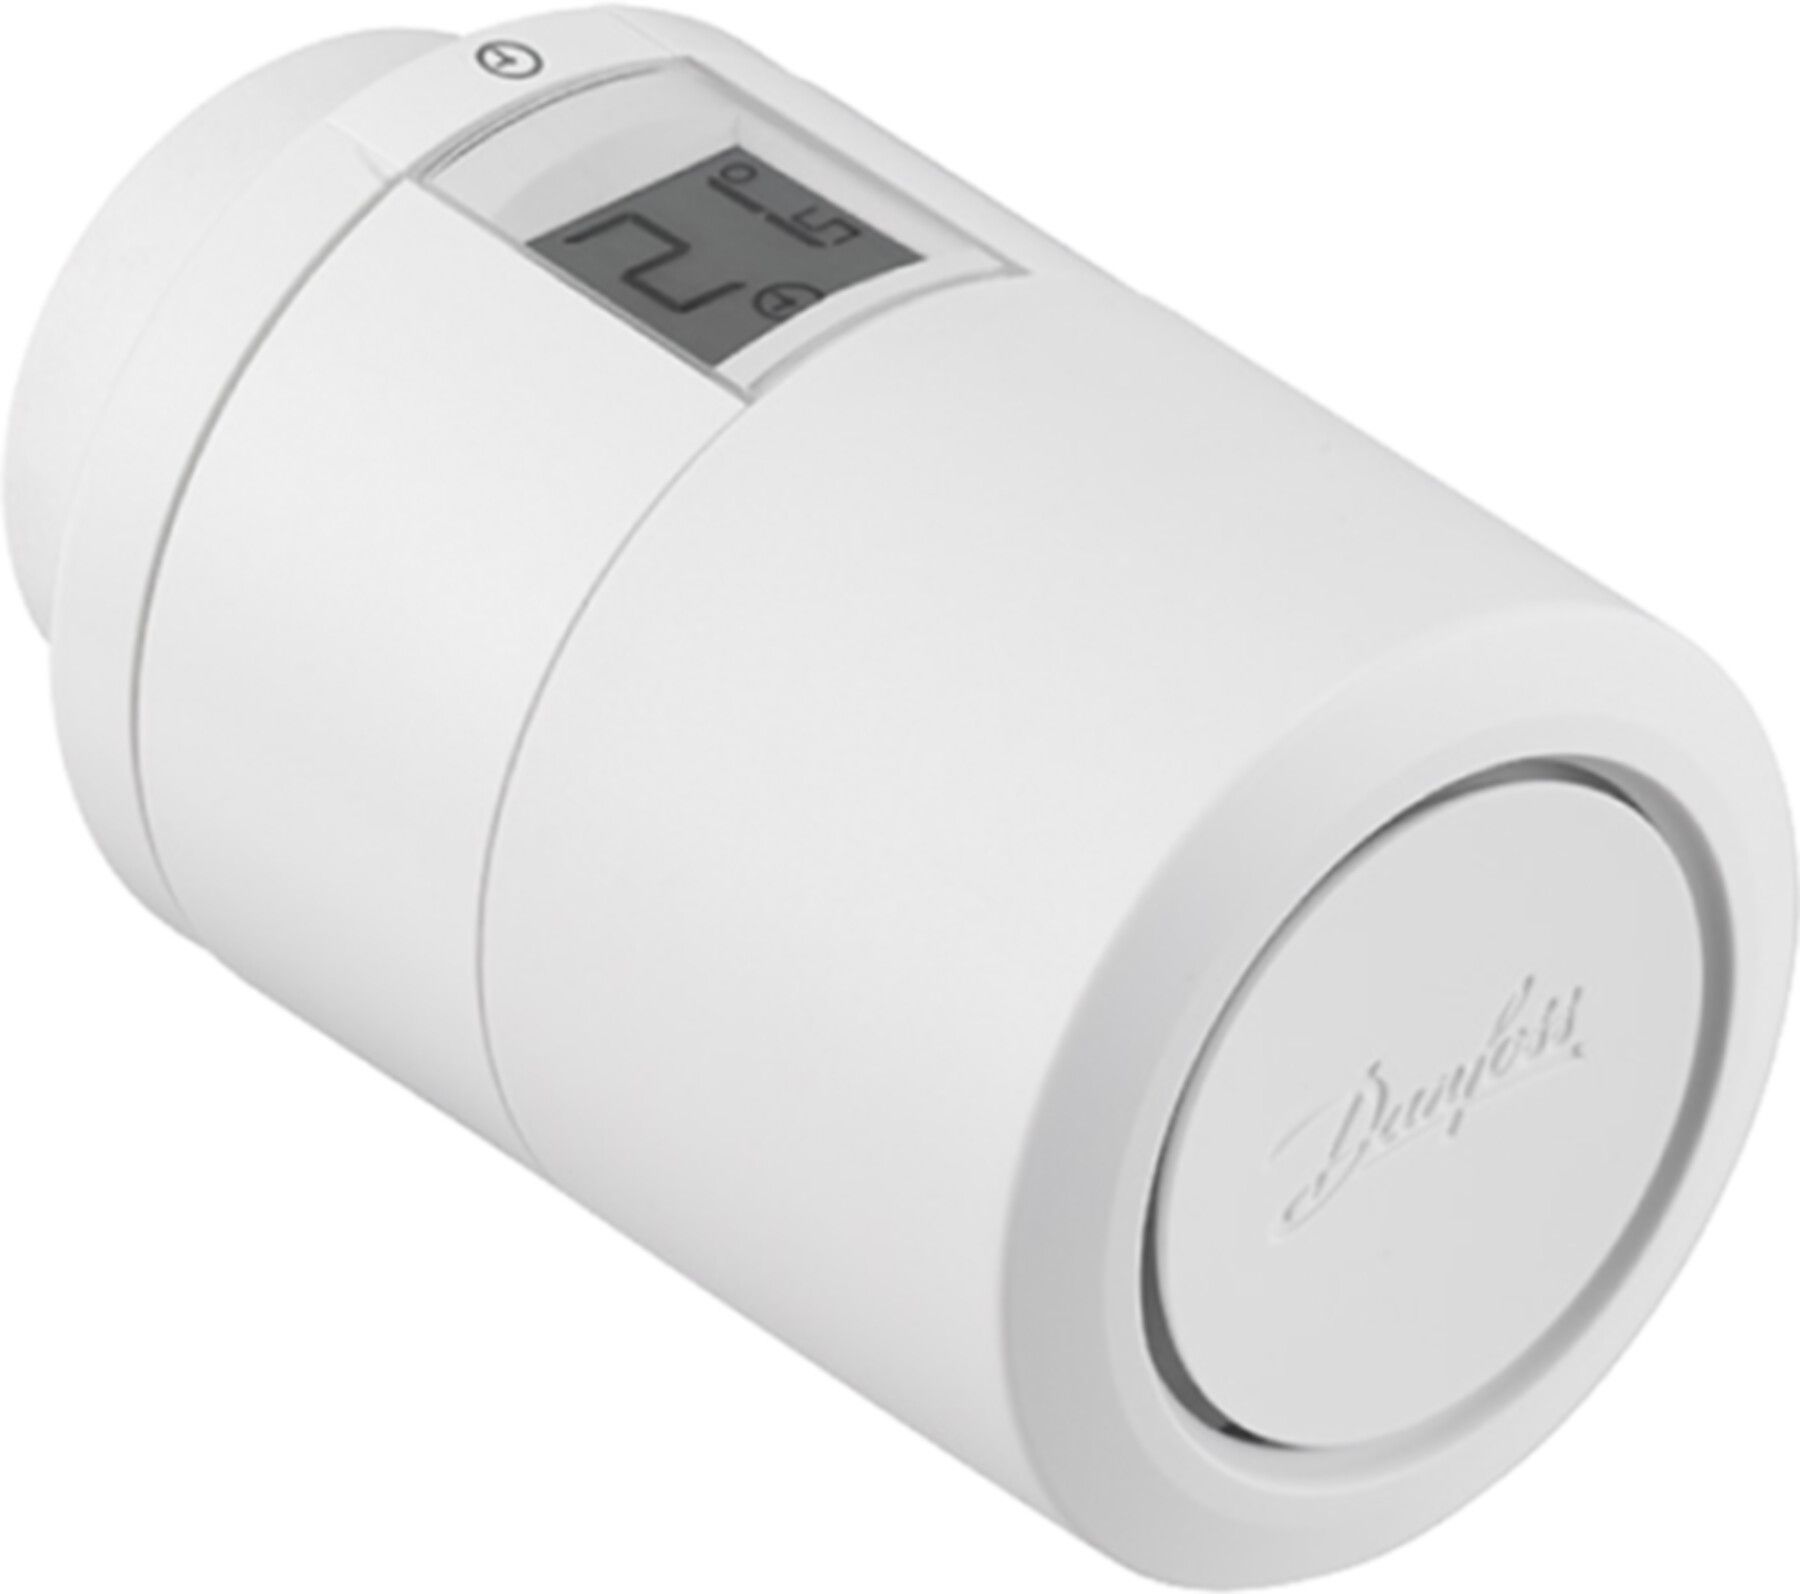 Thermostatfühler Eco Bluetooth 014G1001 - Danfoss Programm